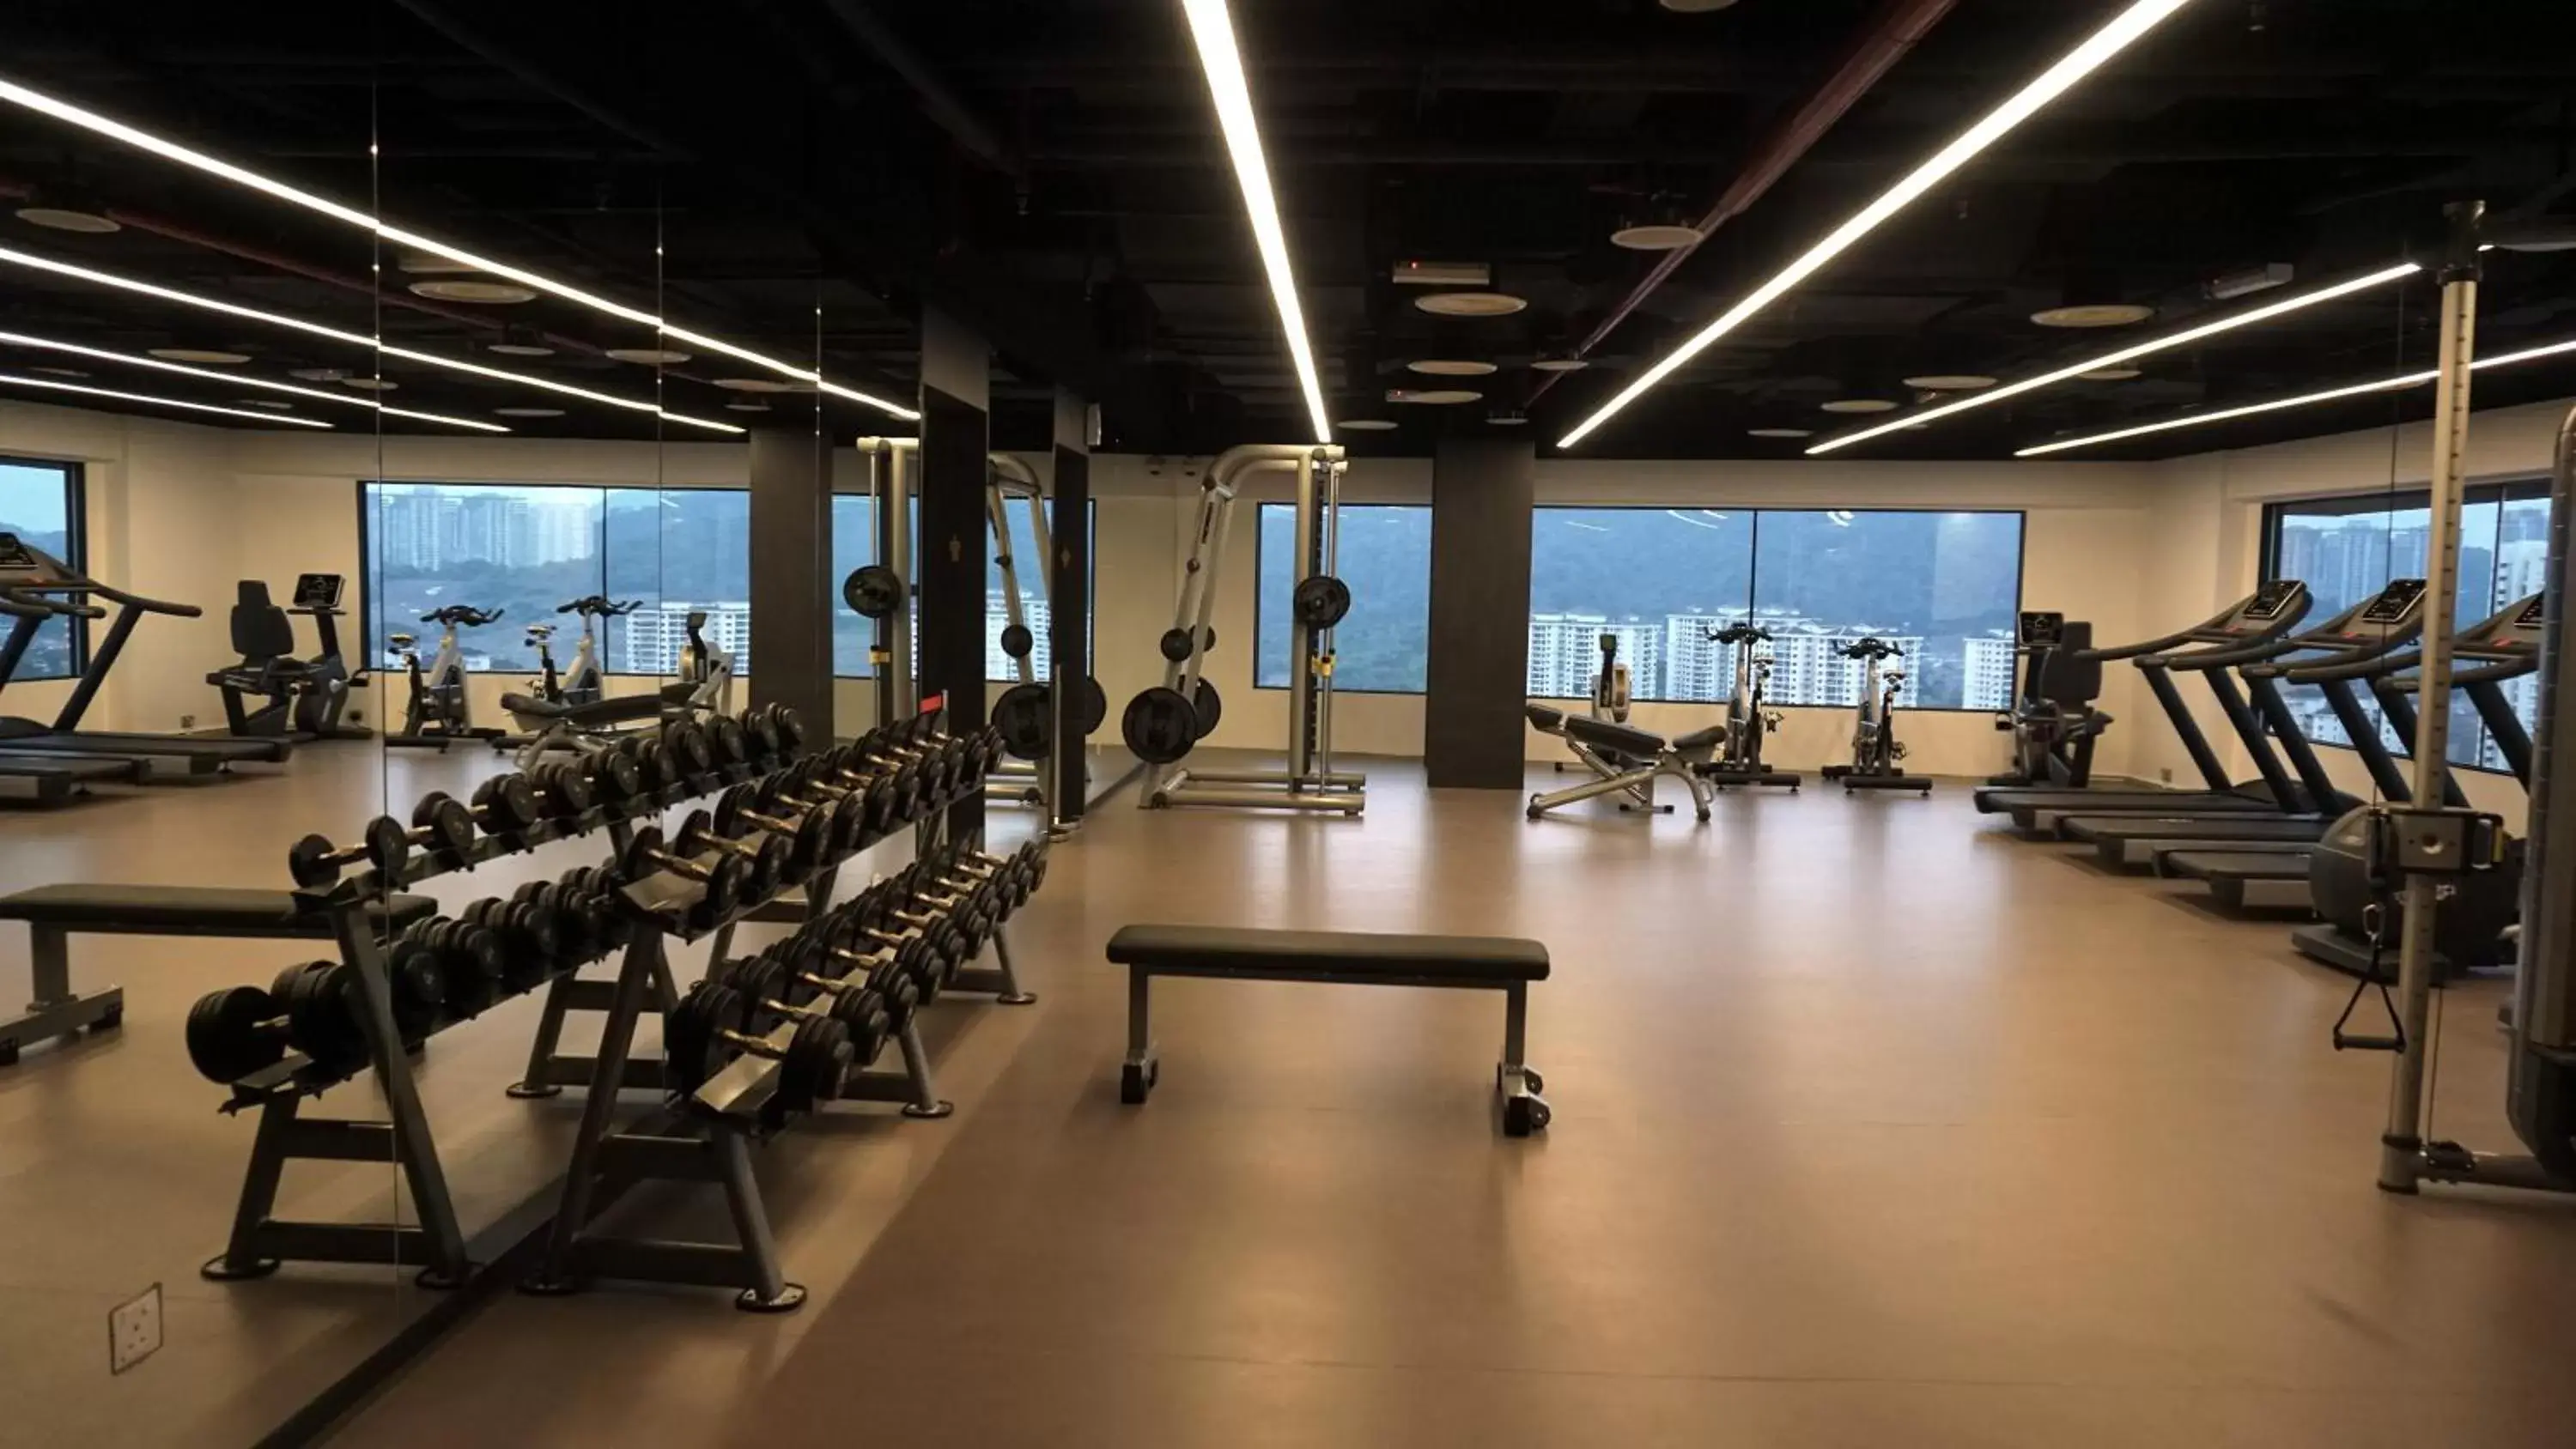 Fitness centre/facilities, Fitness Center/Facilities in G Hotel Kelawai